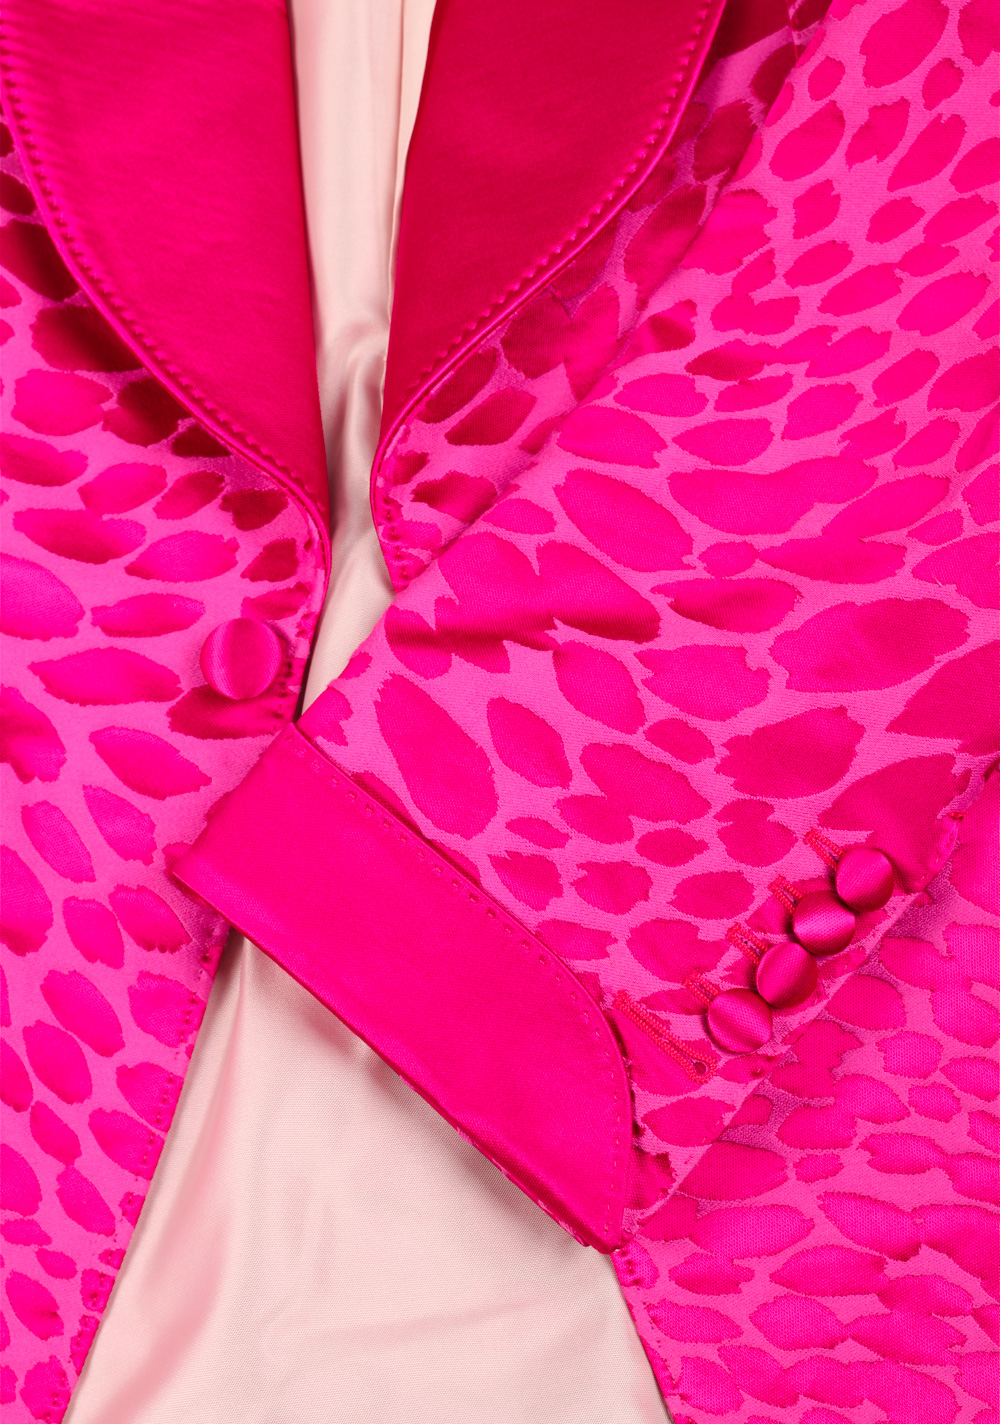 TOM FORD Atticus Pink Tuxedo Dinner Jacket Size 46 / 36R U.S. | Costume Limité